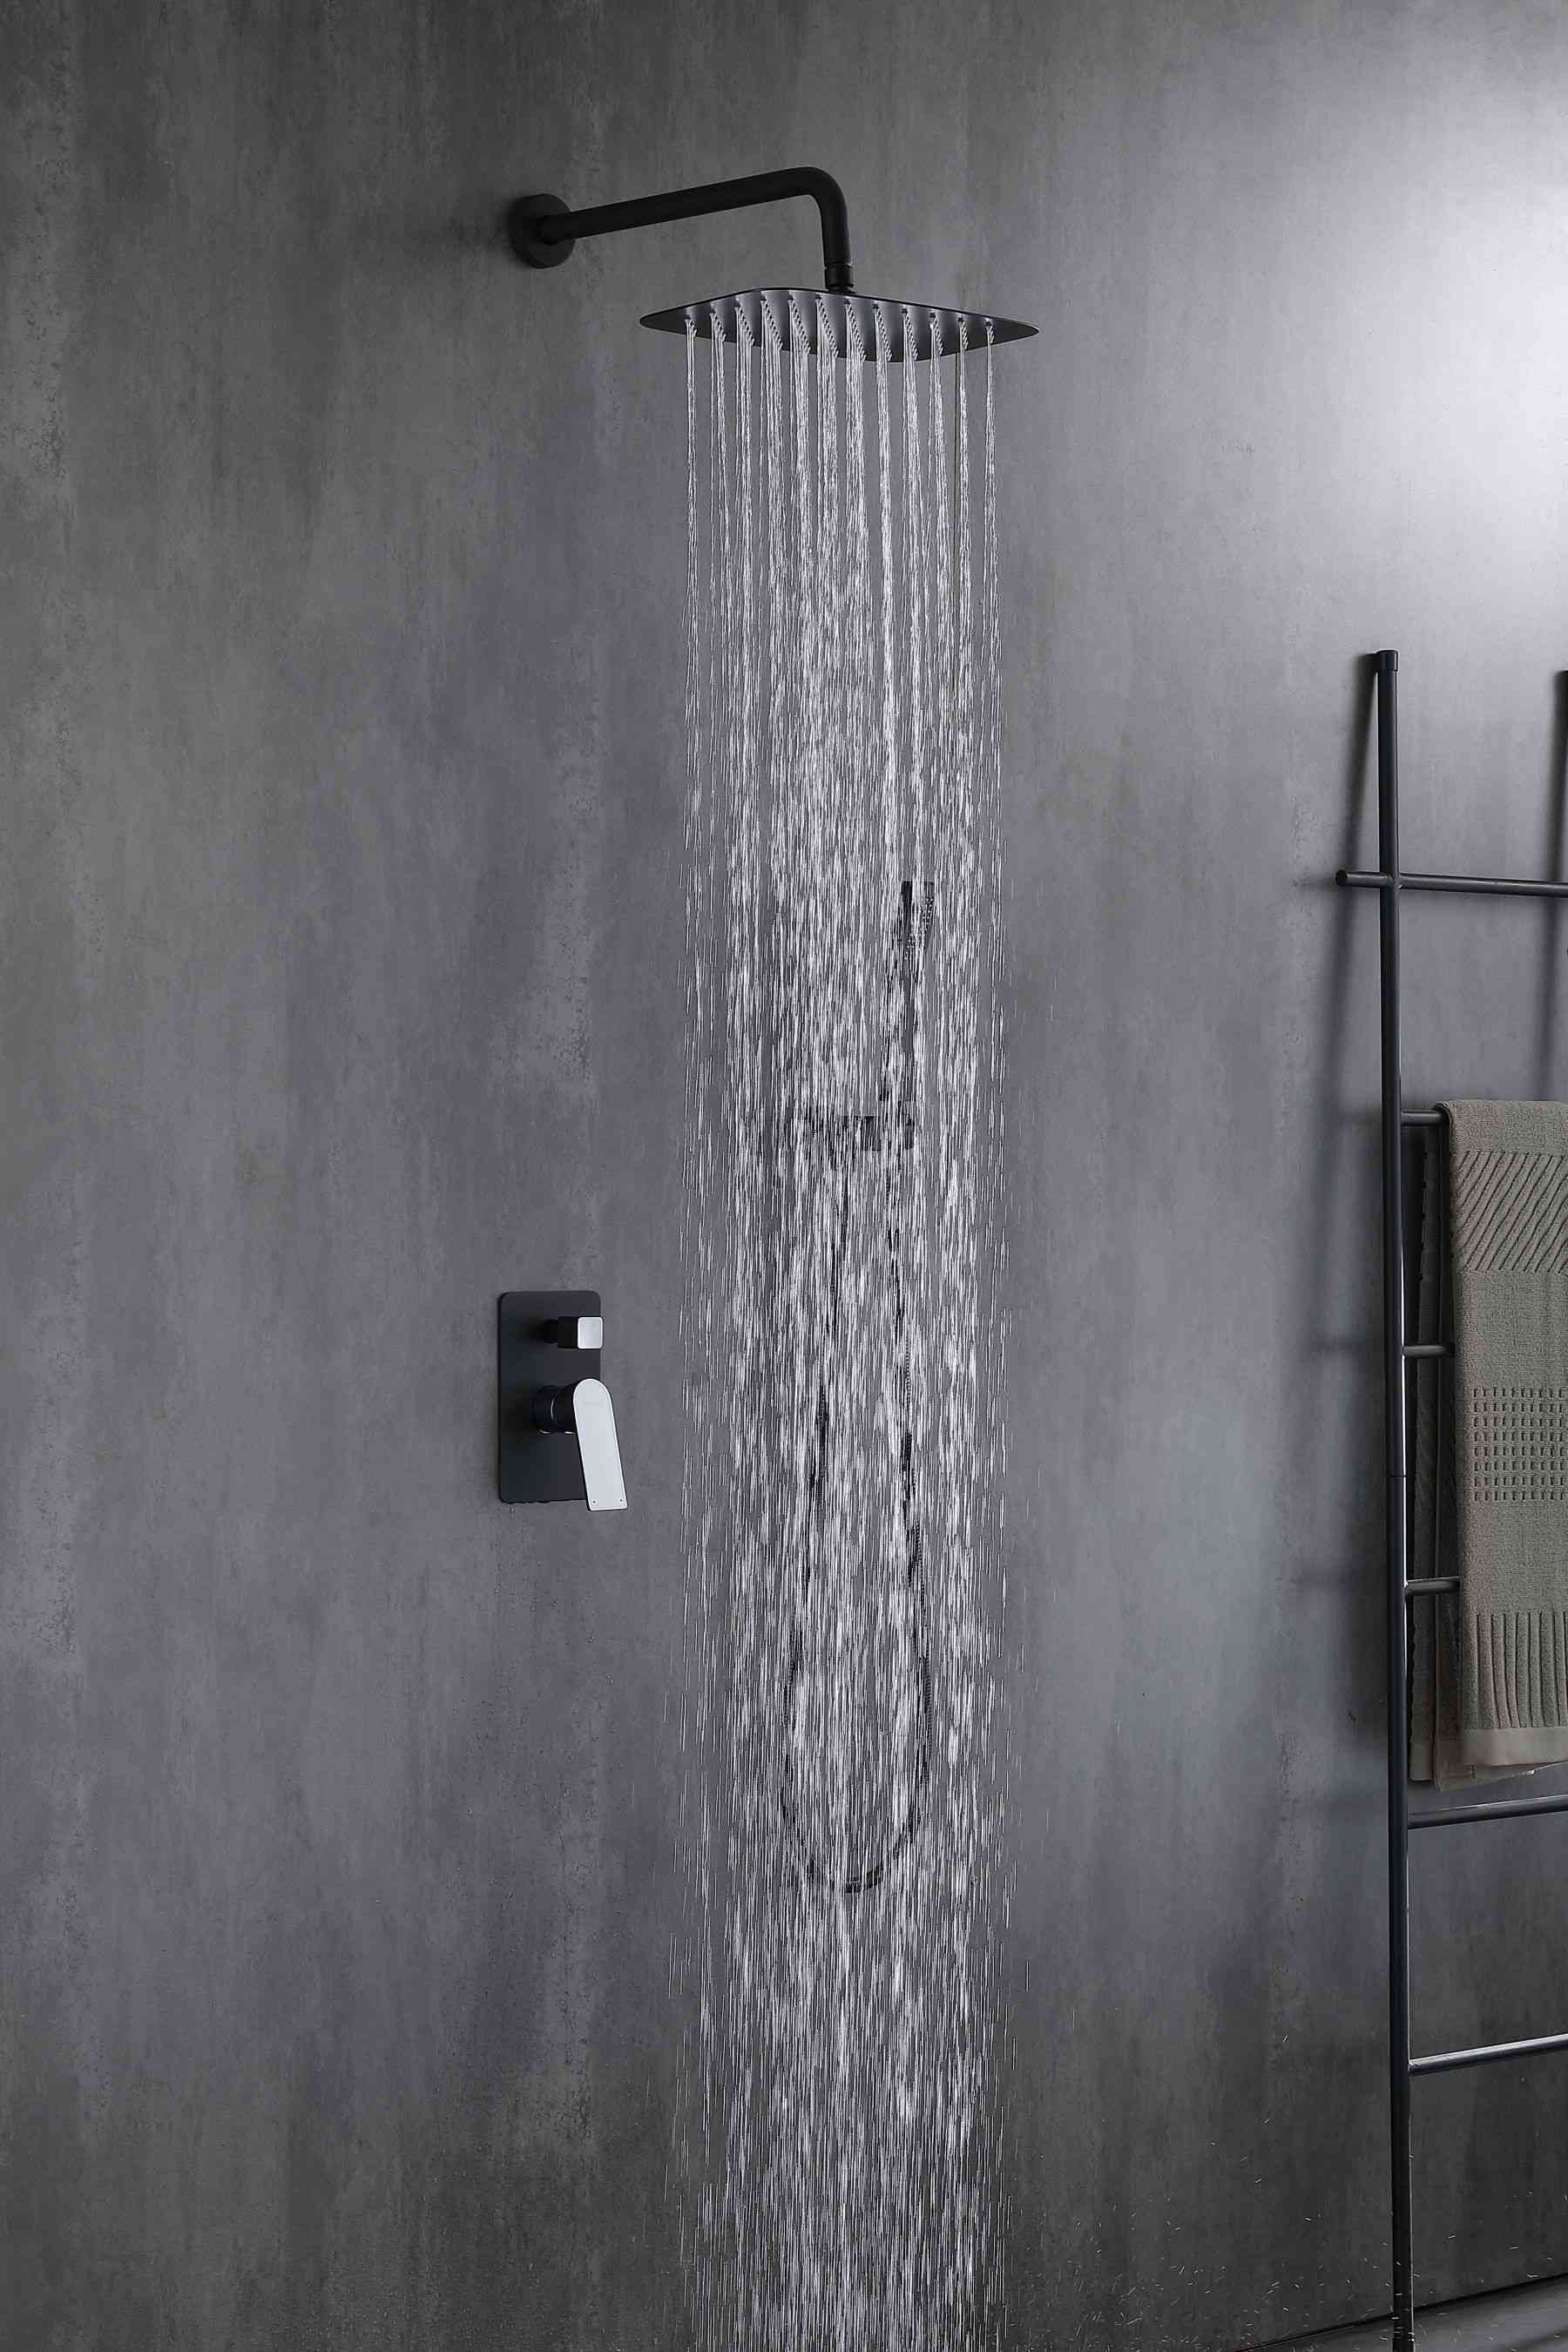 Mixer of Showers hidden with Rainweather condition